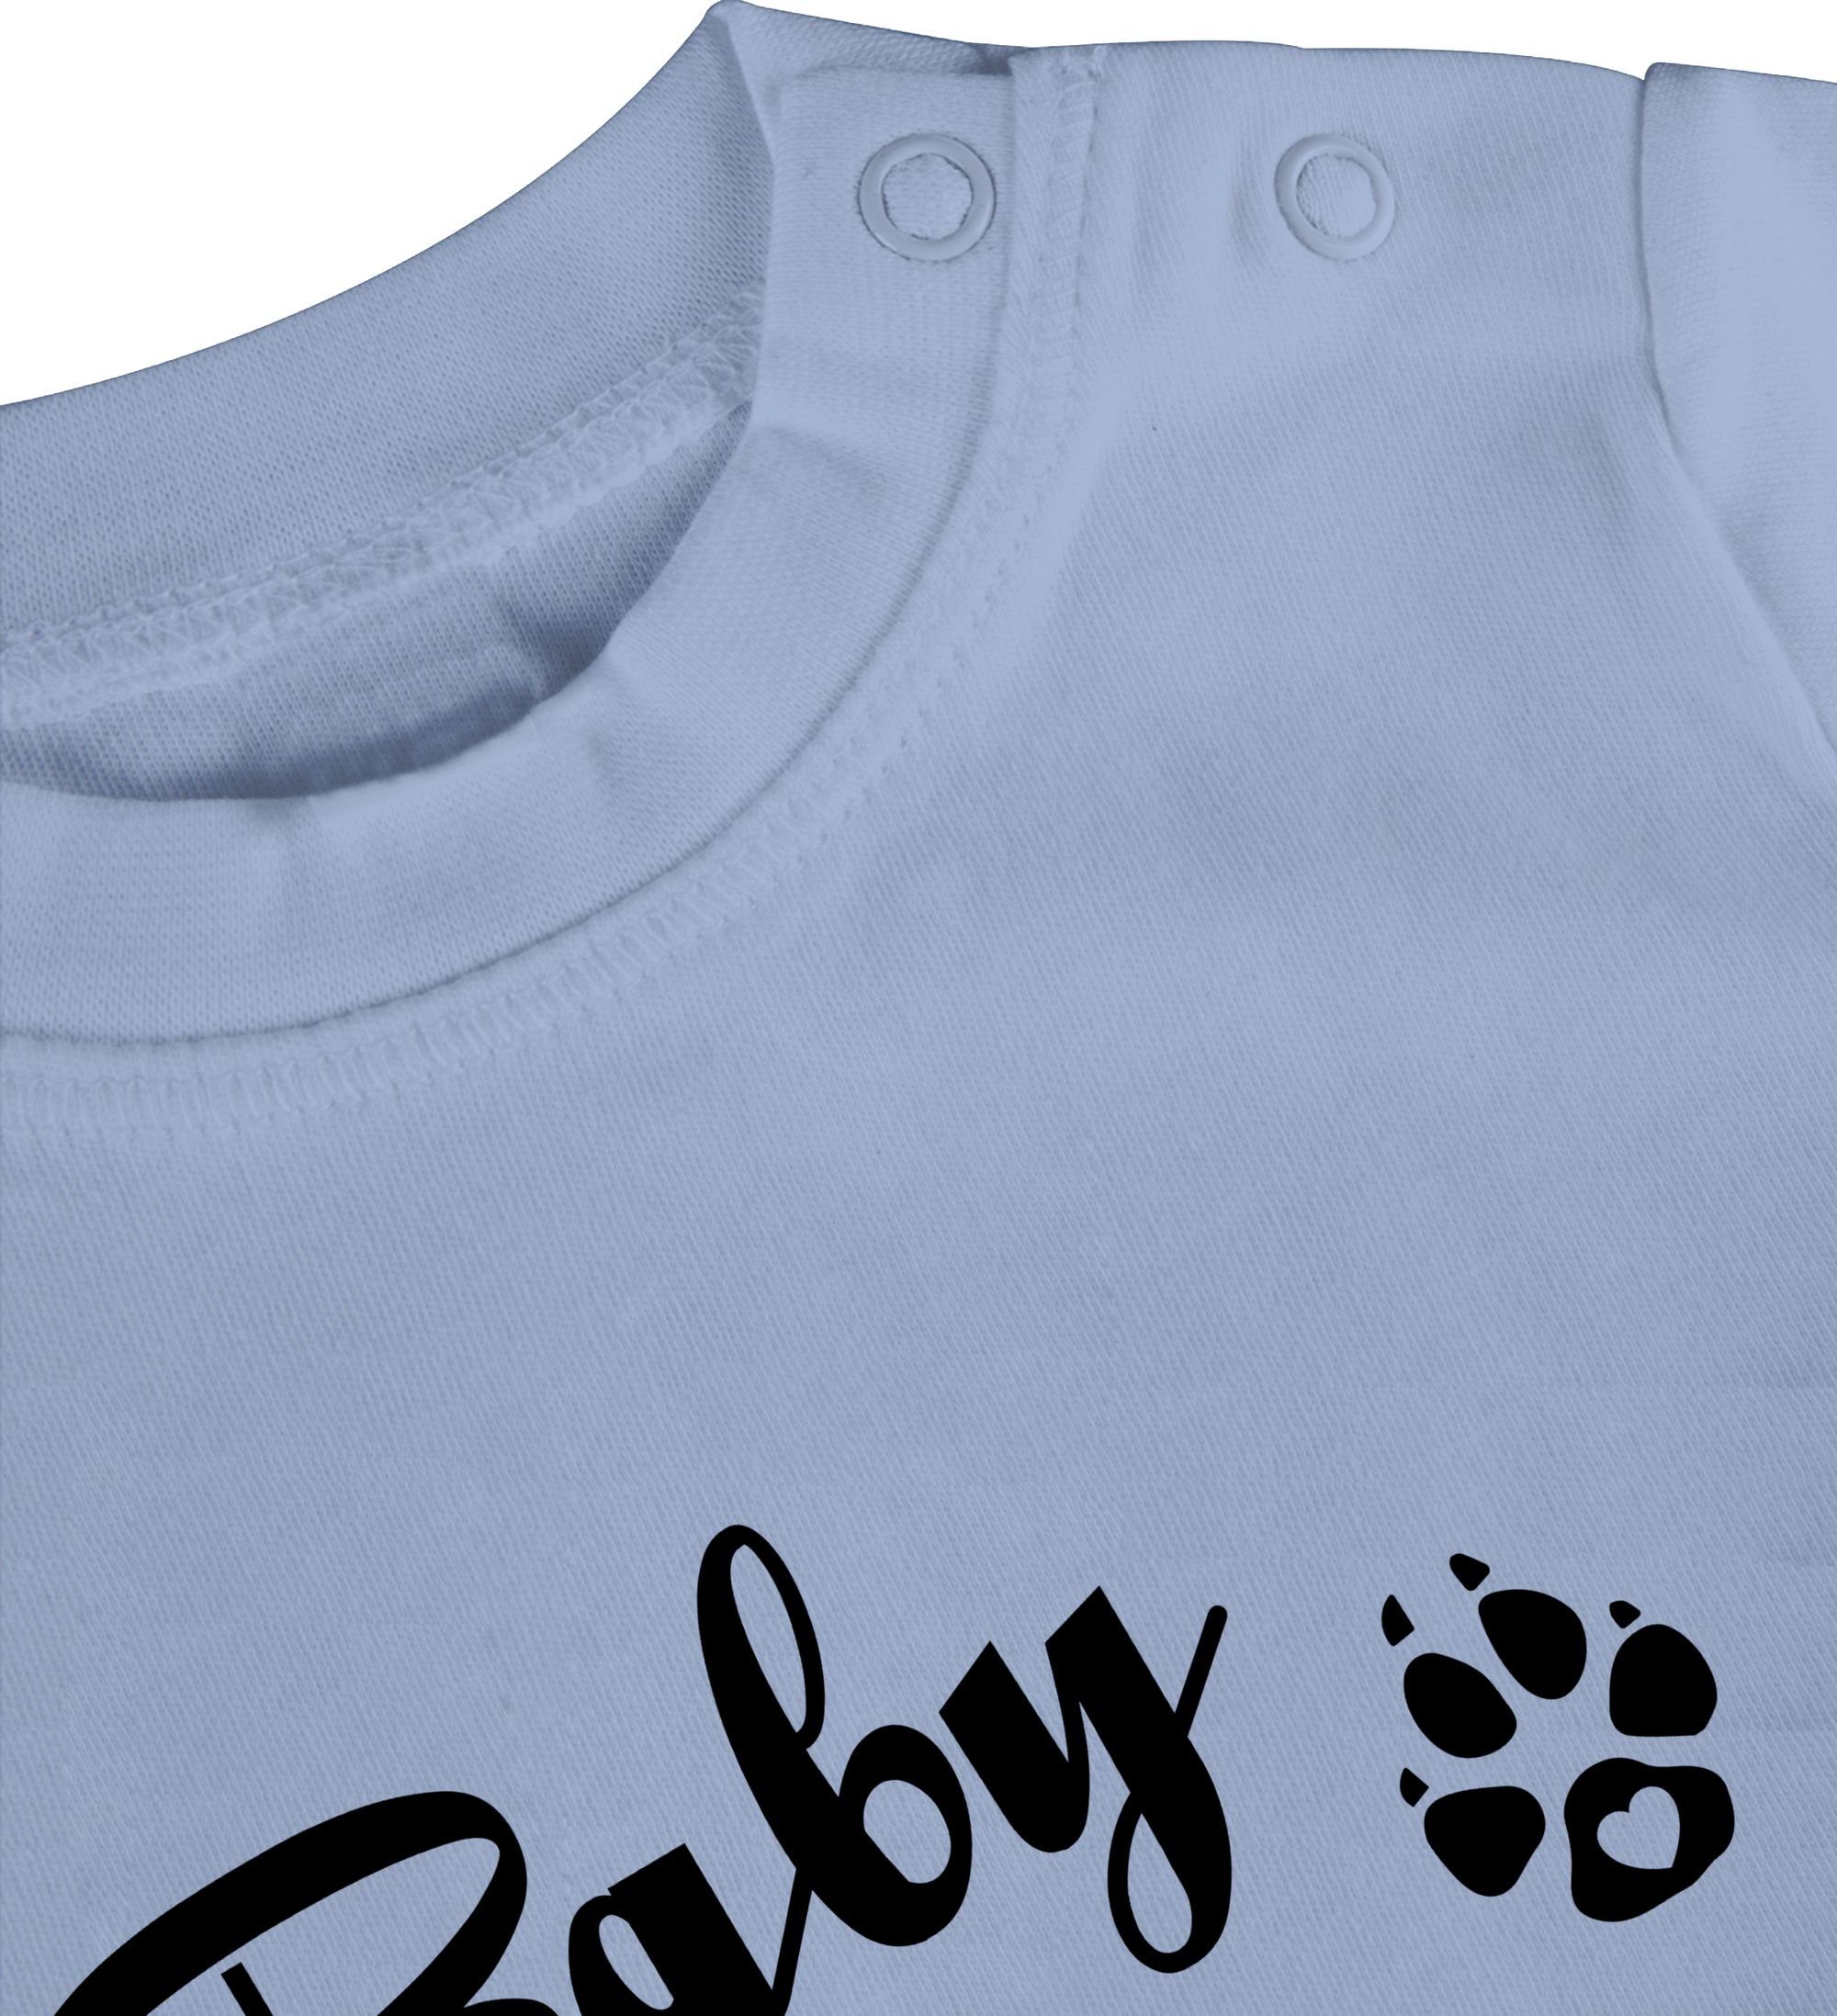 Shirtracer T-Shirt Baby Bär Lettering Babyblau Baby & 3 Junge Strampler Mädchen